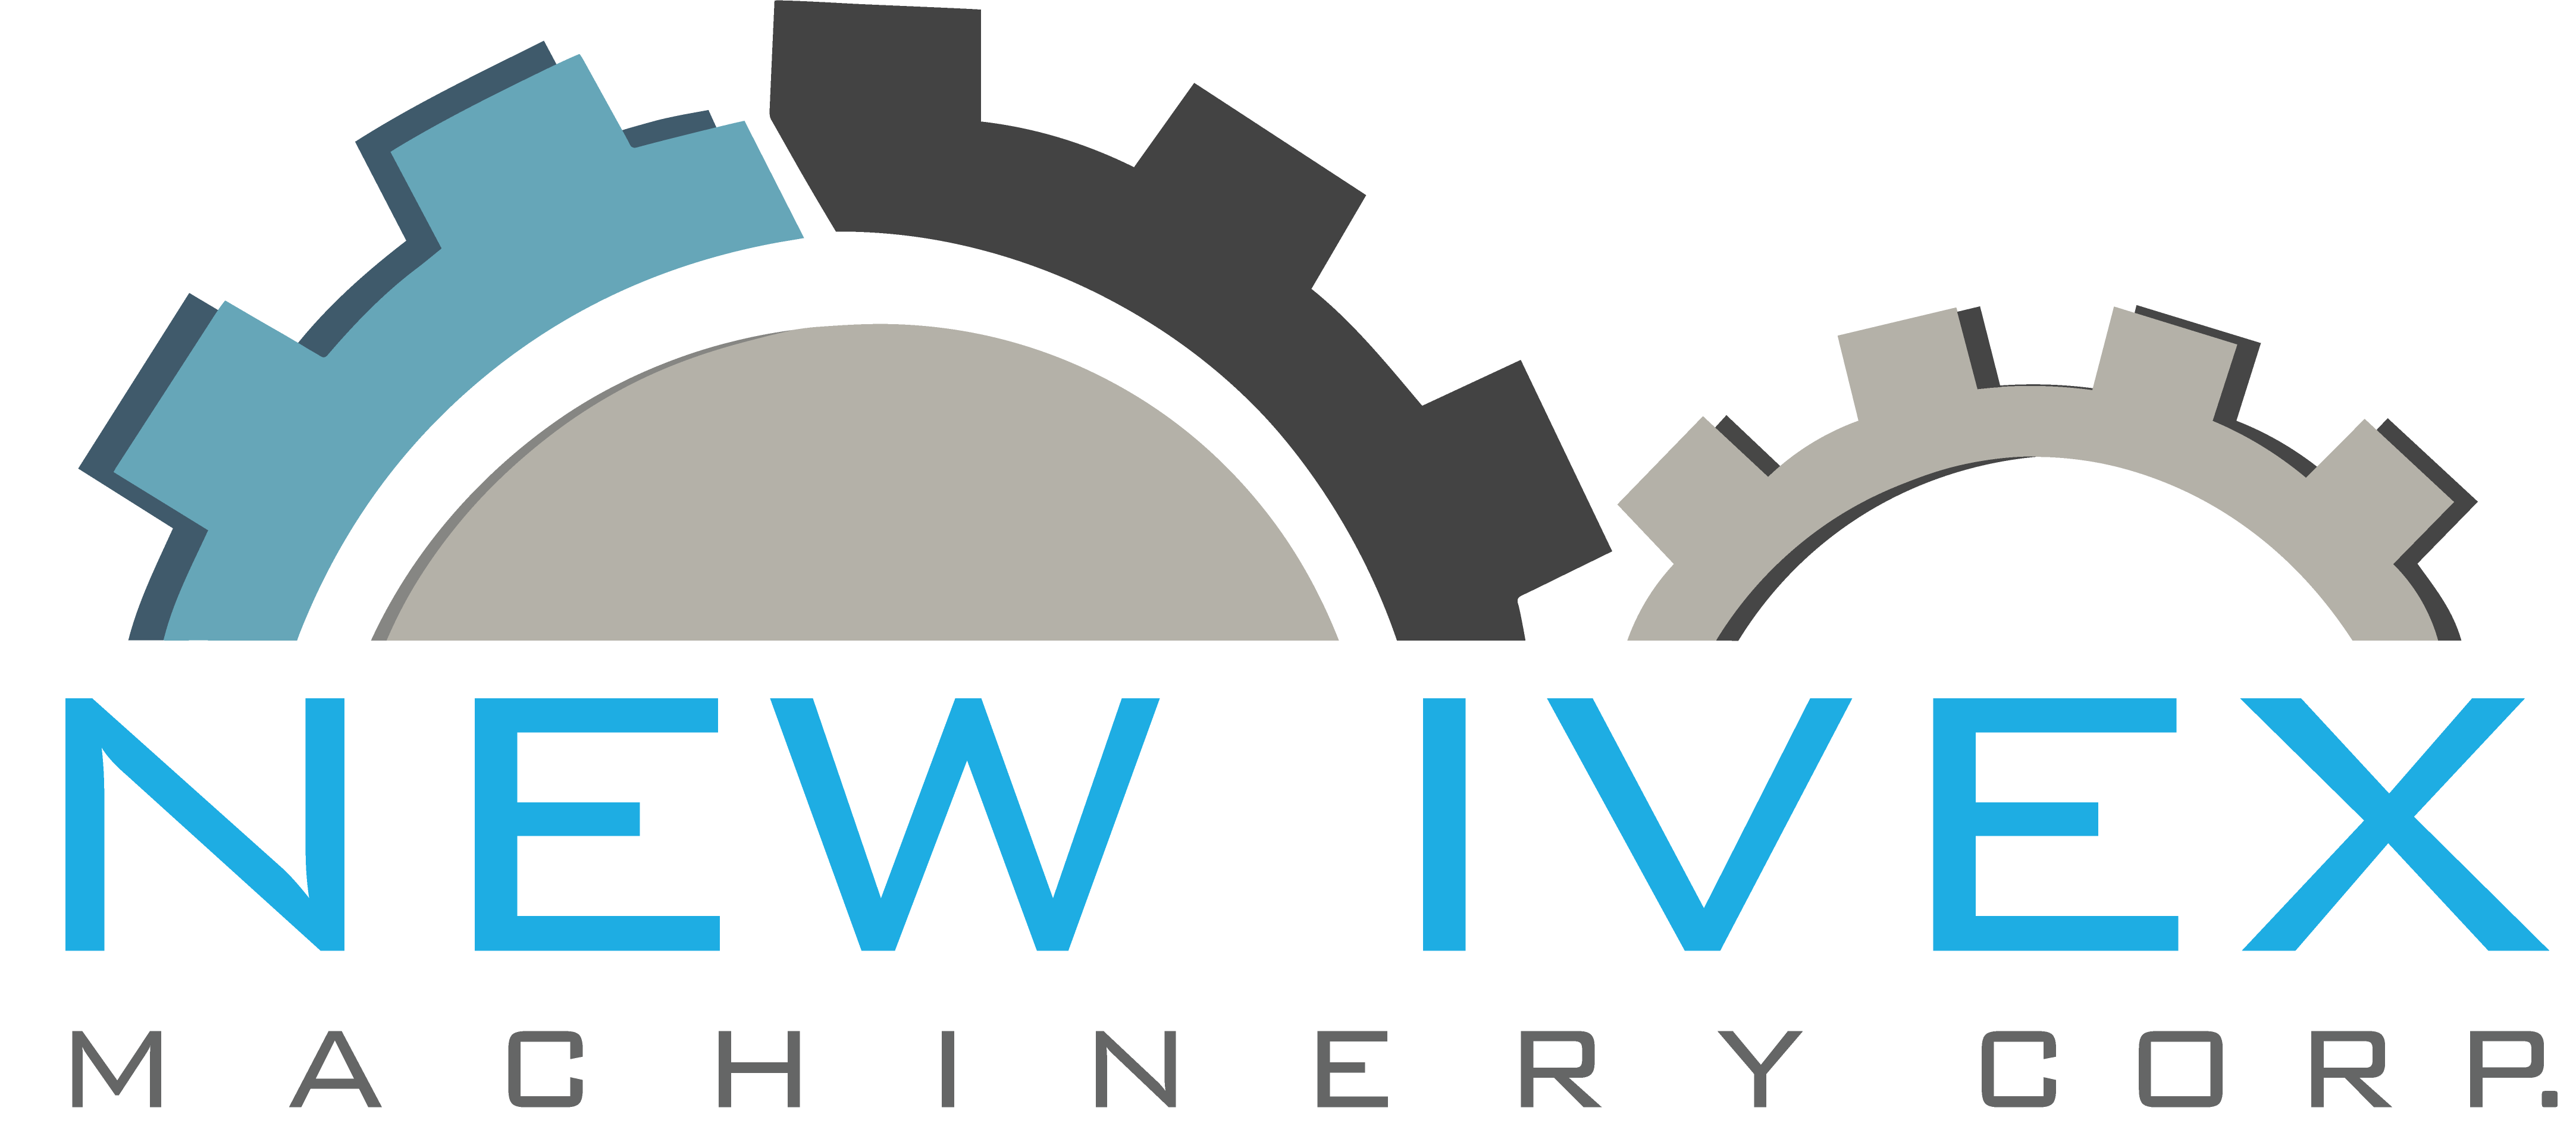 New Ivex Machinery Corporation